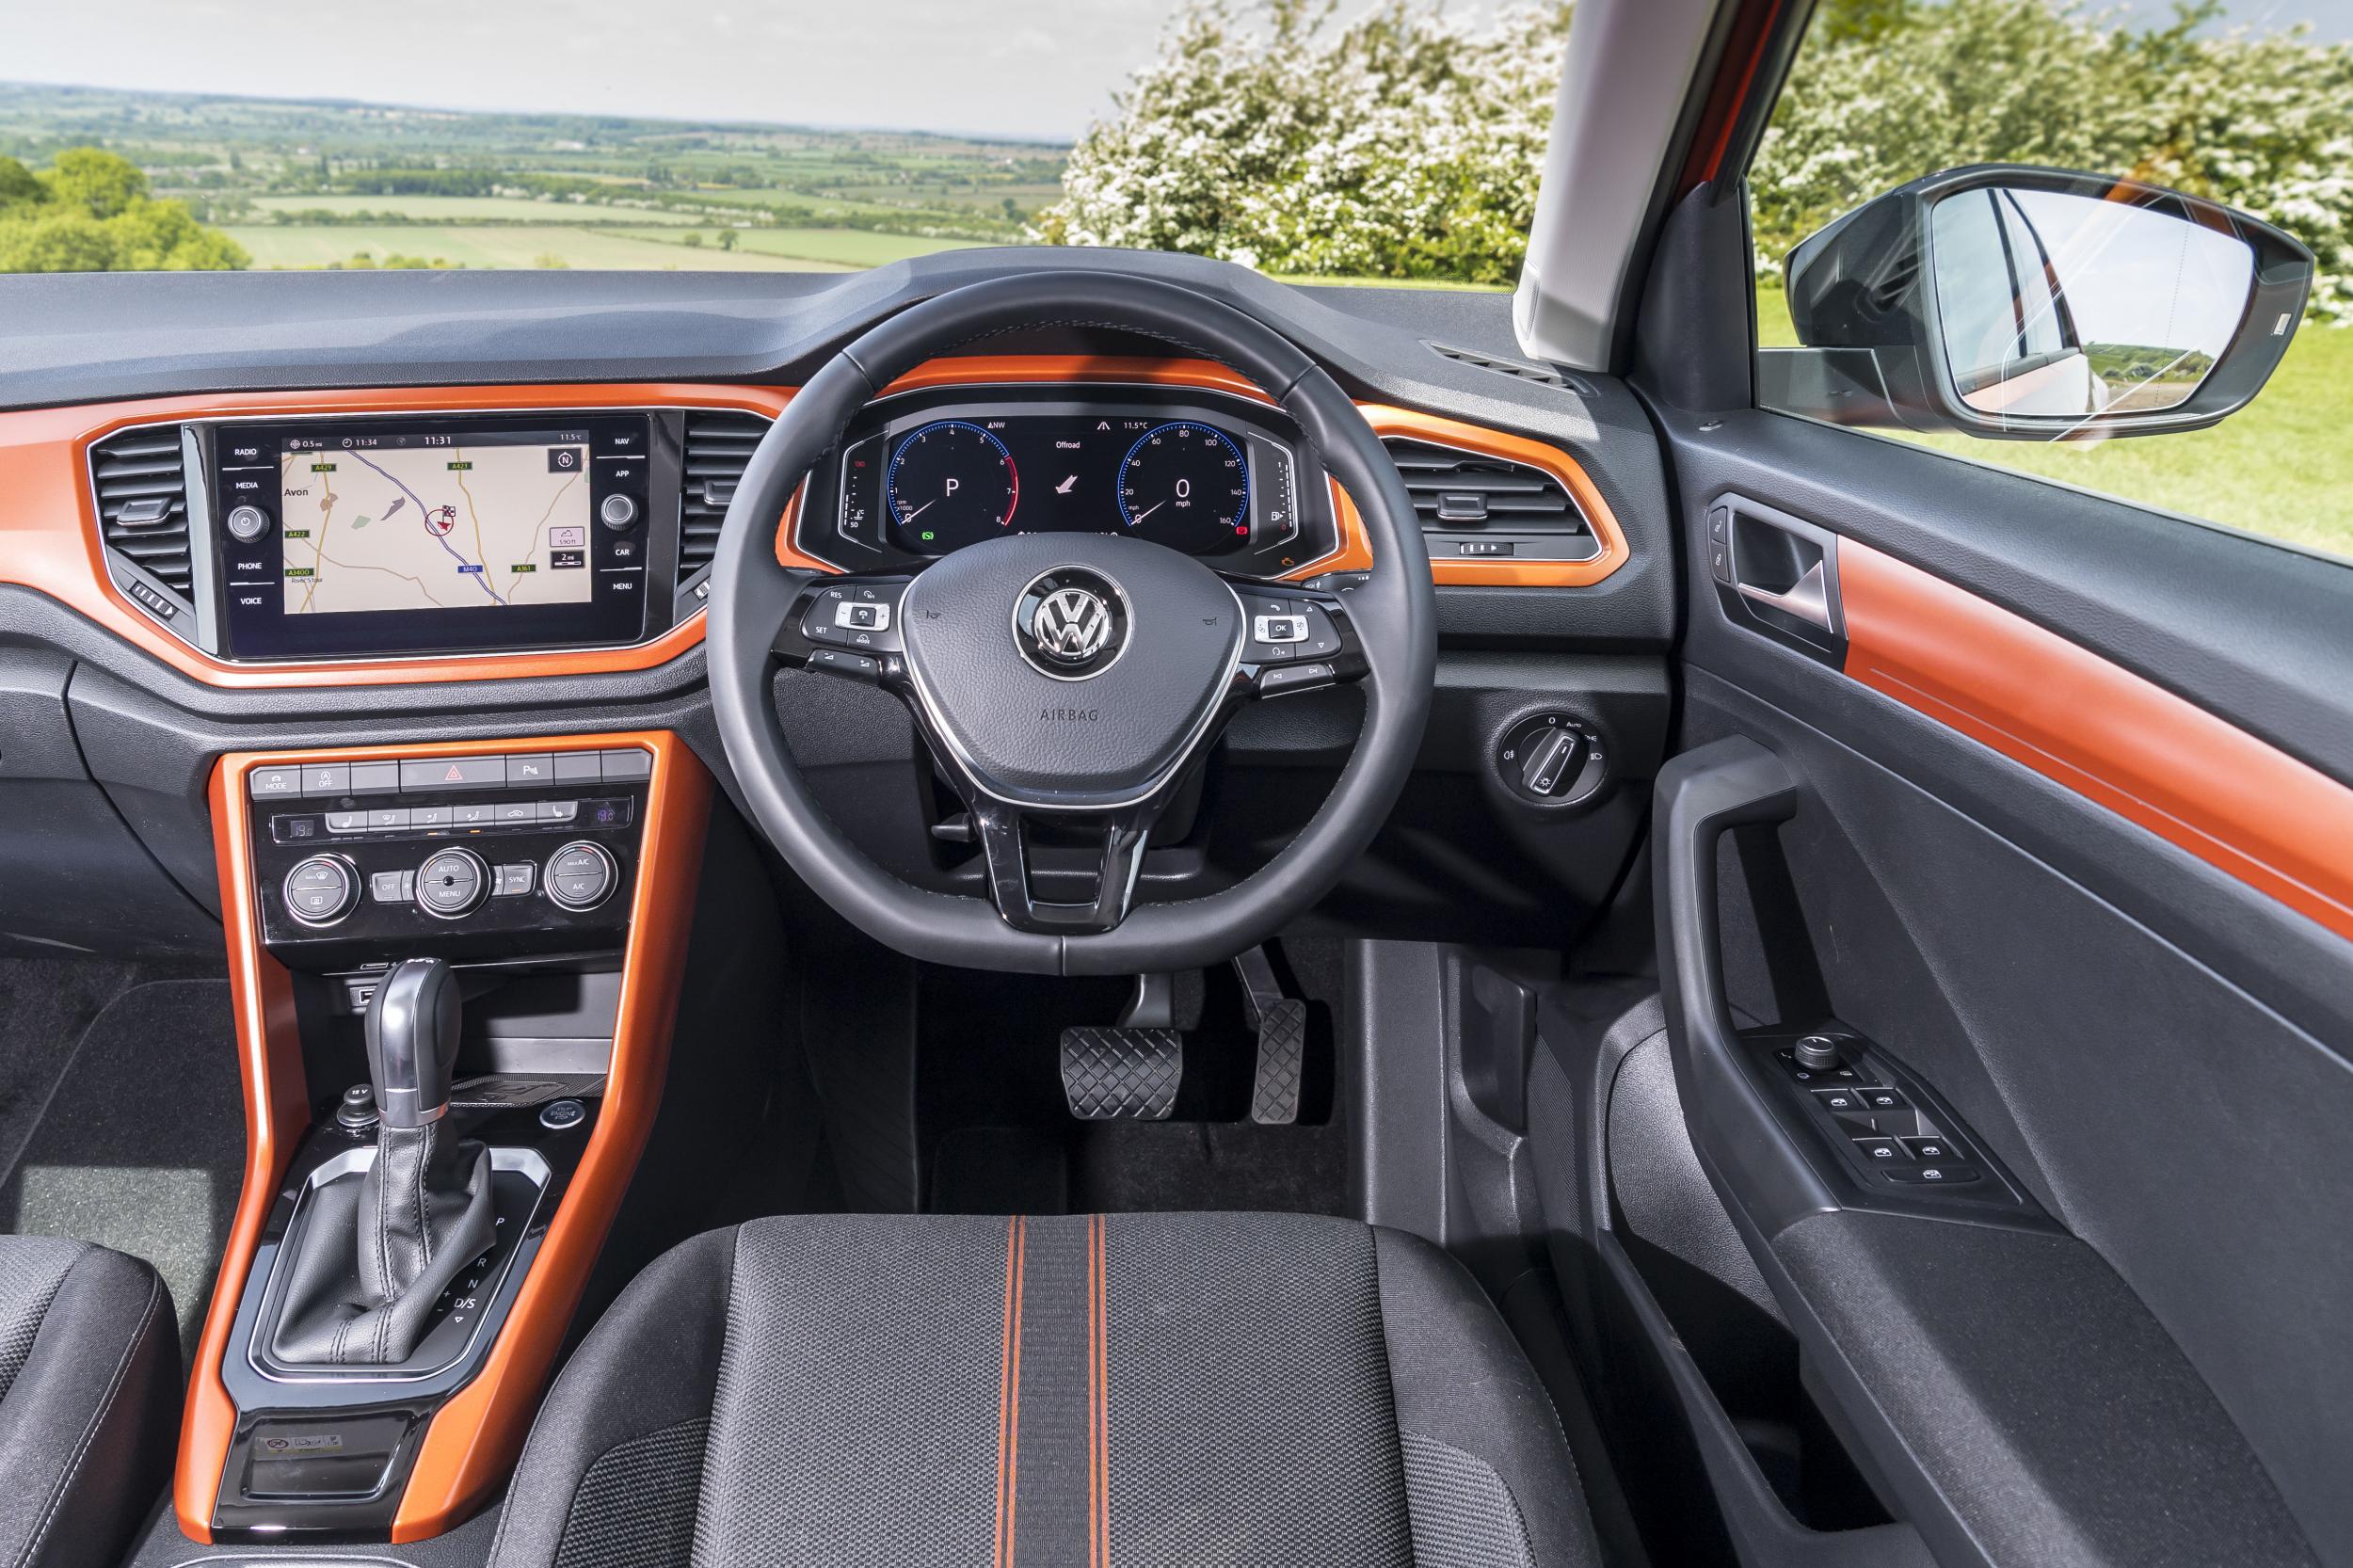 2023 Volkswagen T-Roc R-Line: Quick Review